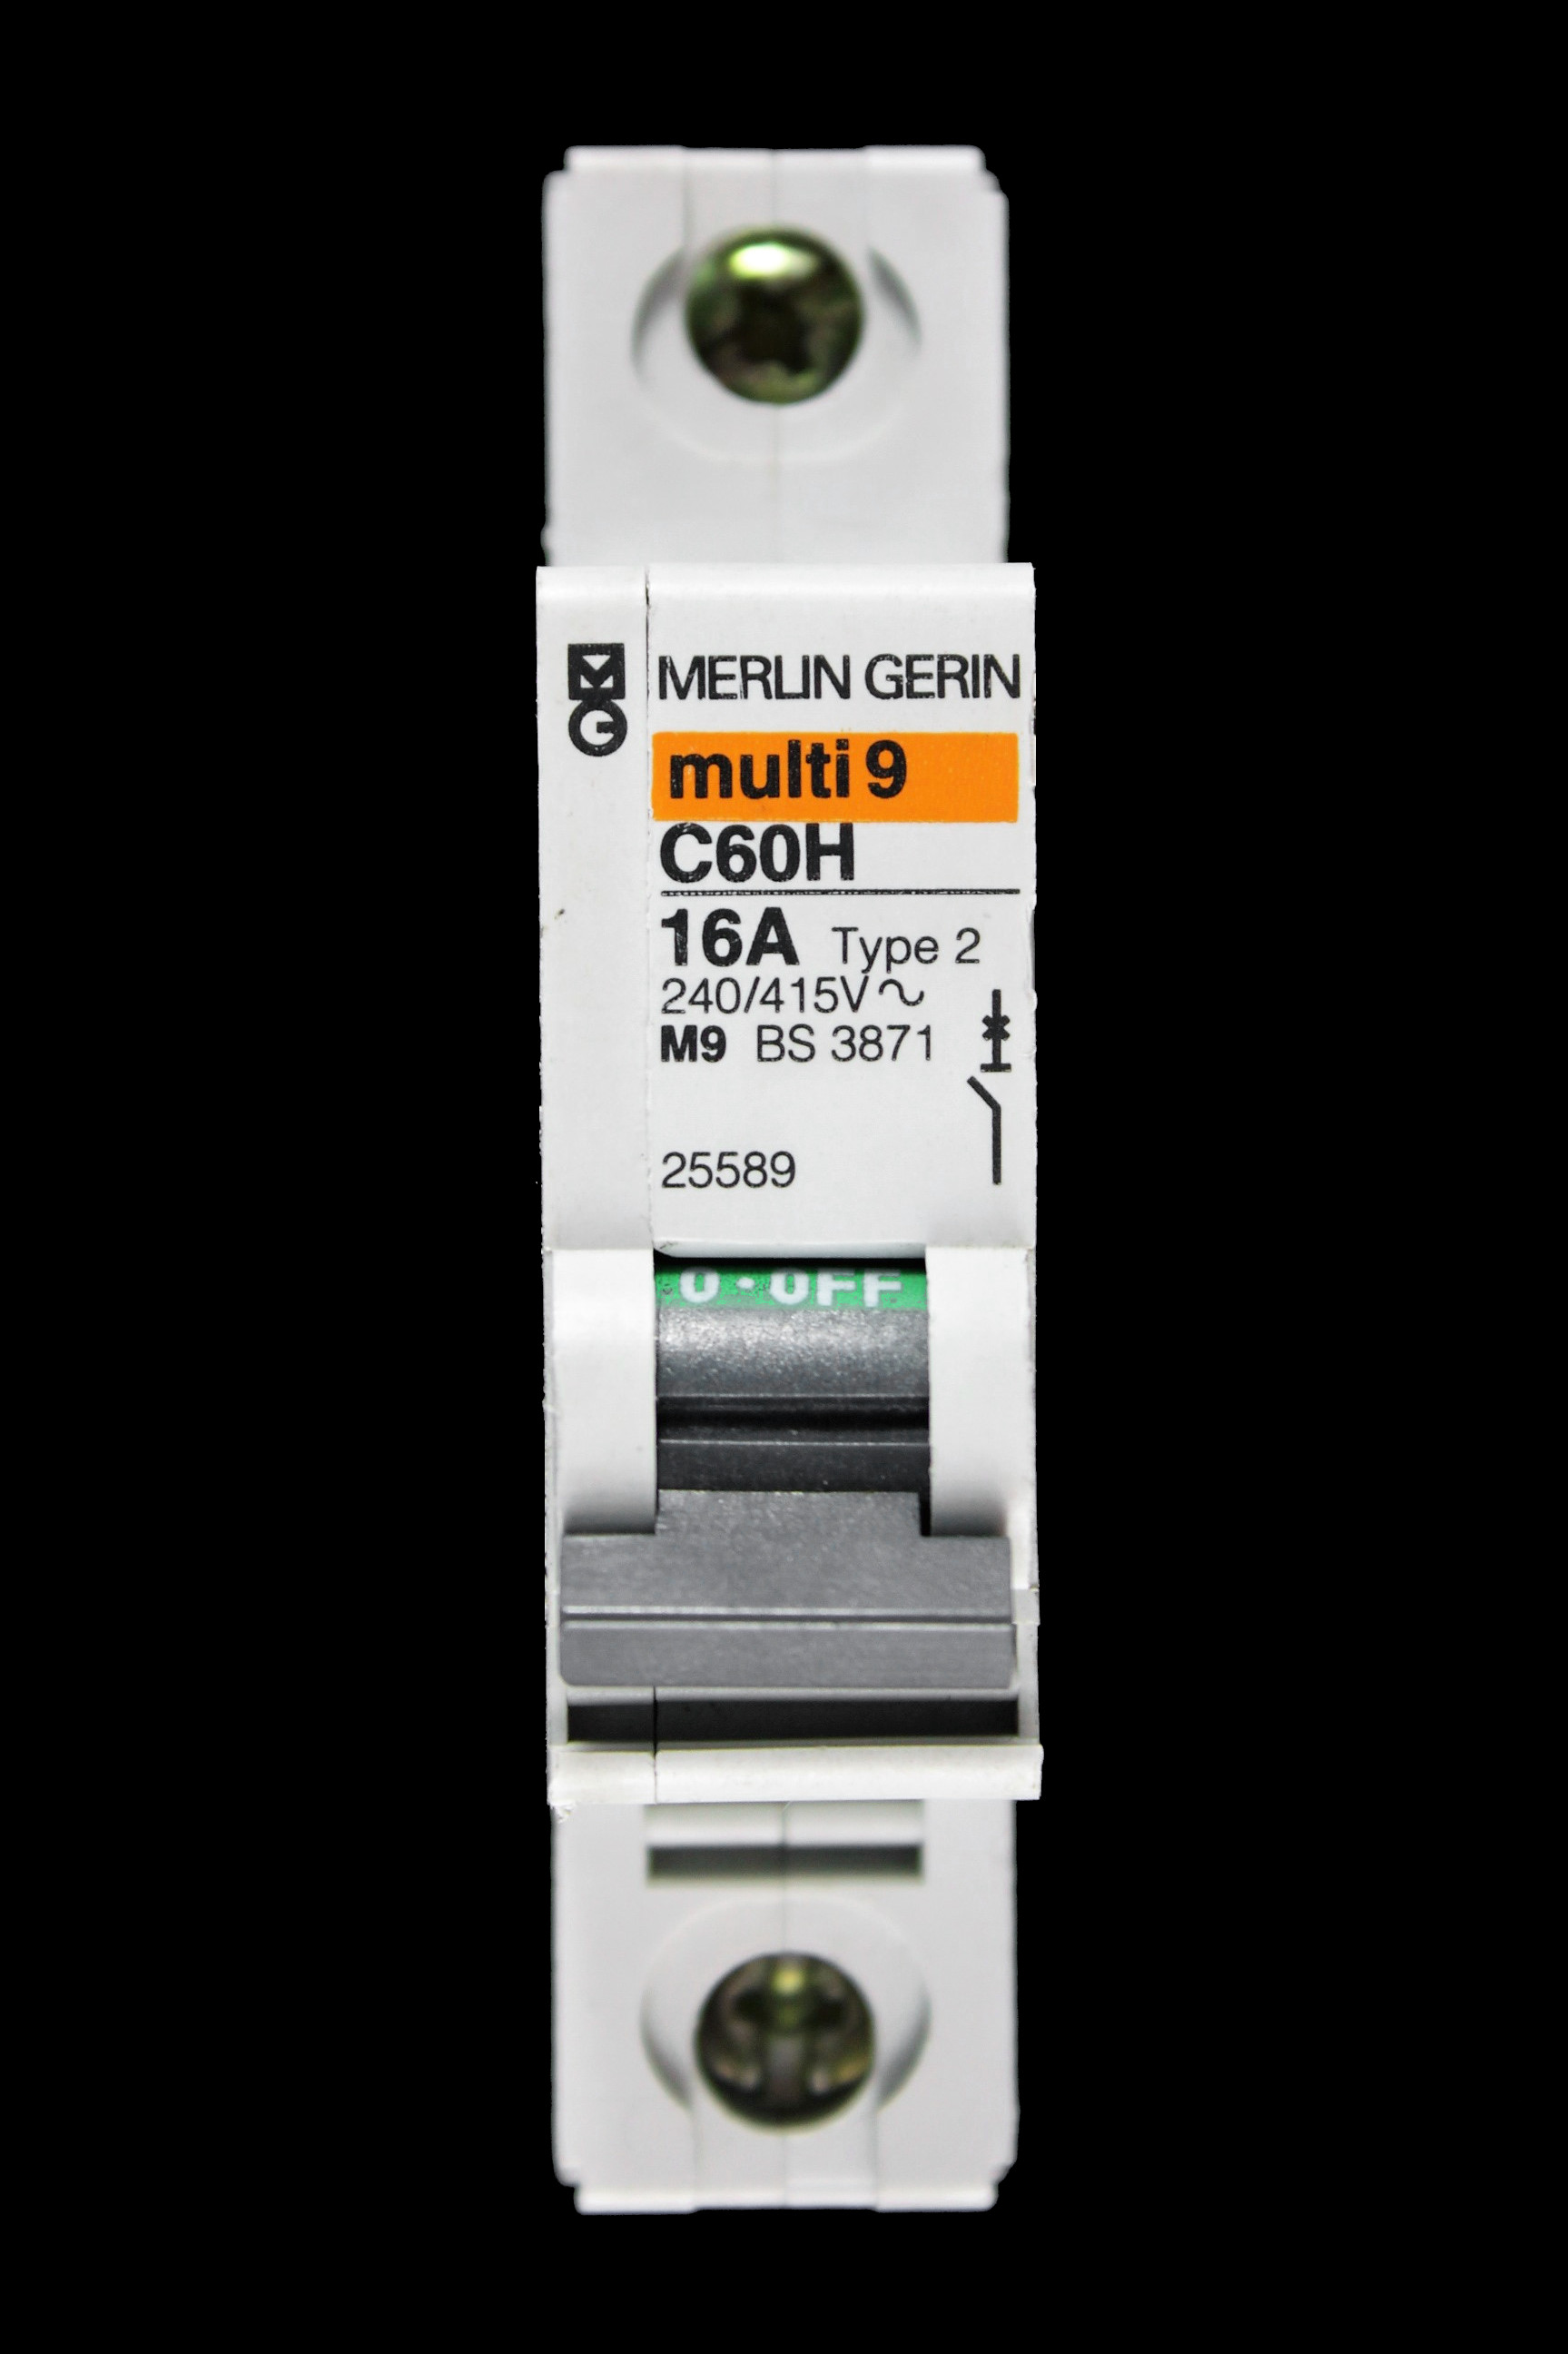 MERLIN GERIN 16 AMP TYPE 2 M9 MCB CIRCUIT BREAKER 25589 C60H MULTI9